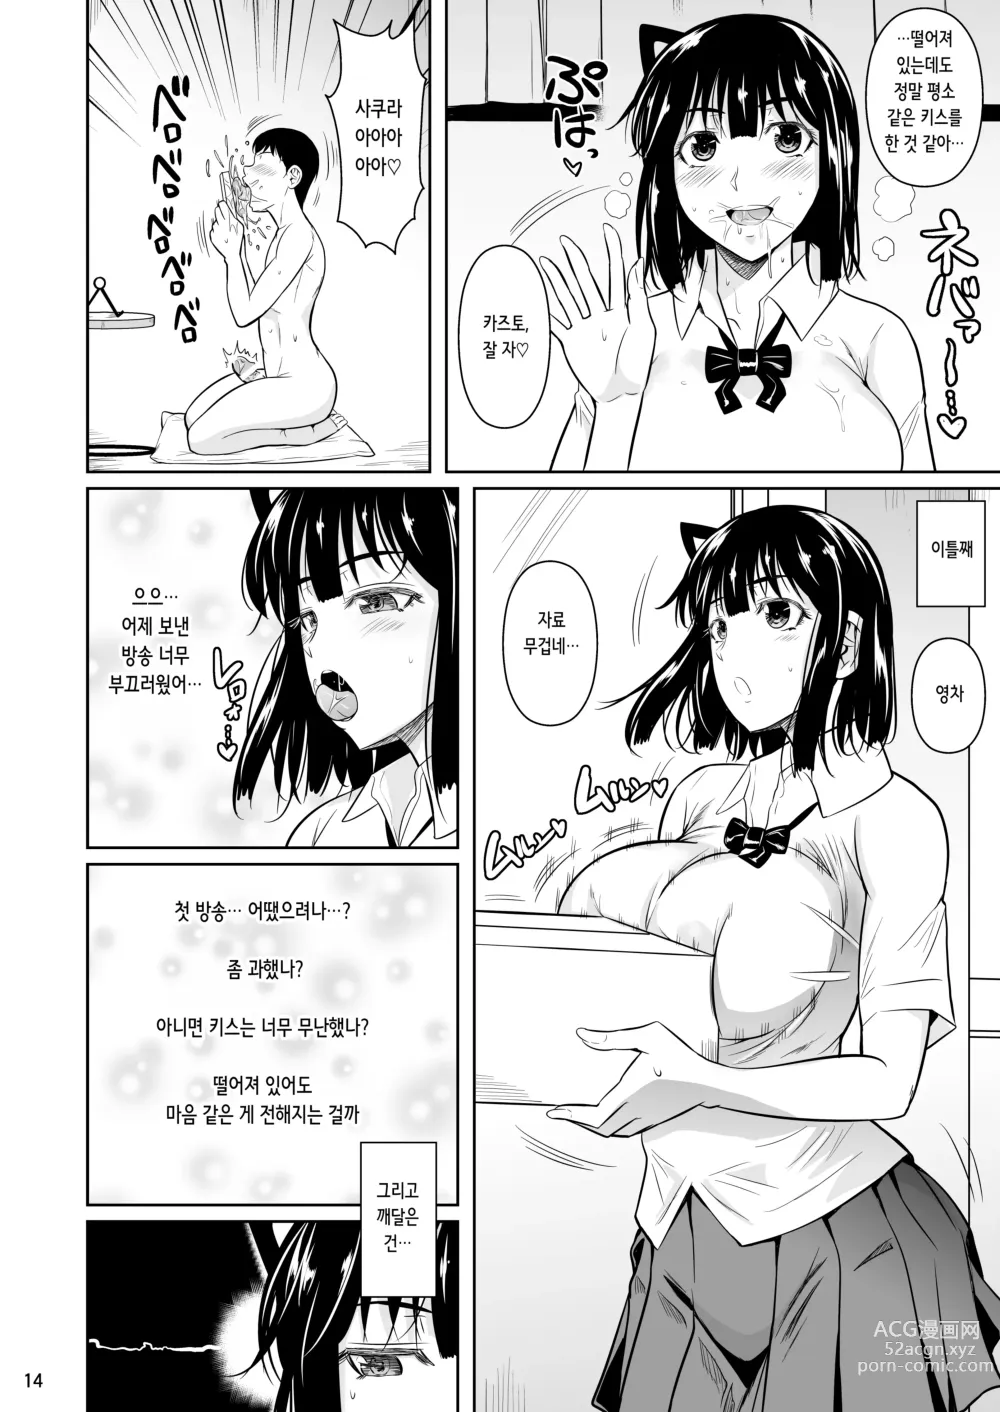 Page 16 of doujinshi 왕따 모브 4 첫 섹스를 한 우등생이 2주간 금욕한 끝에 변론 중에 섹스하는 이야기